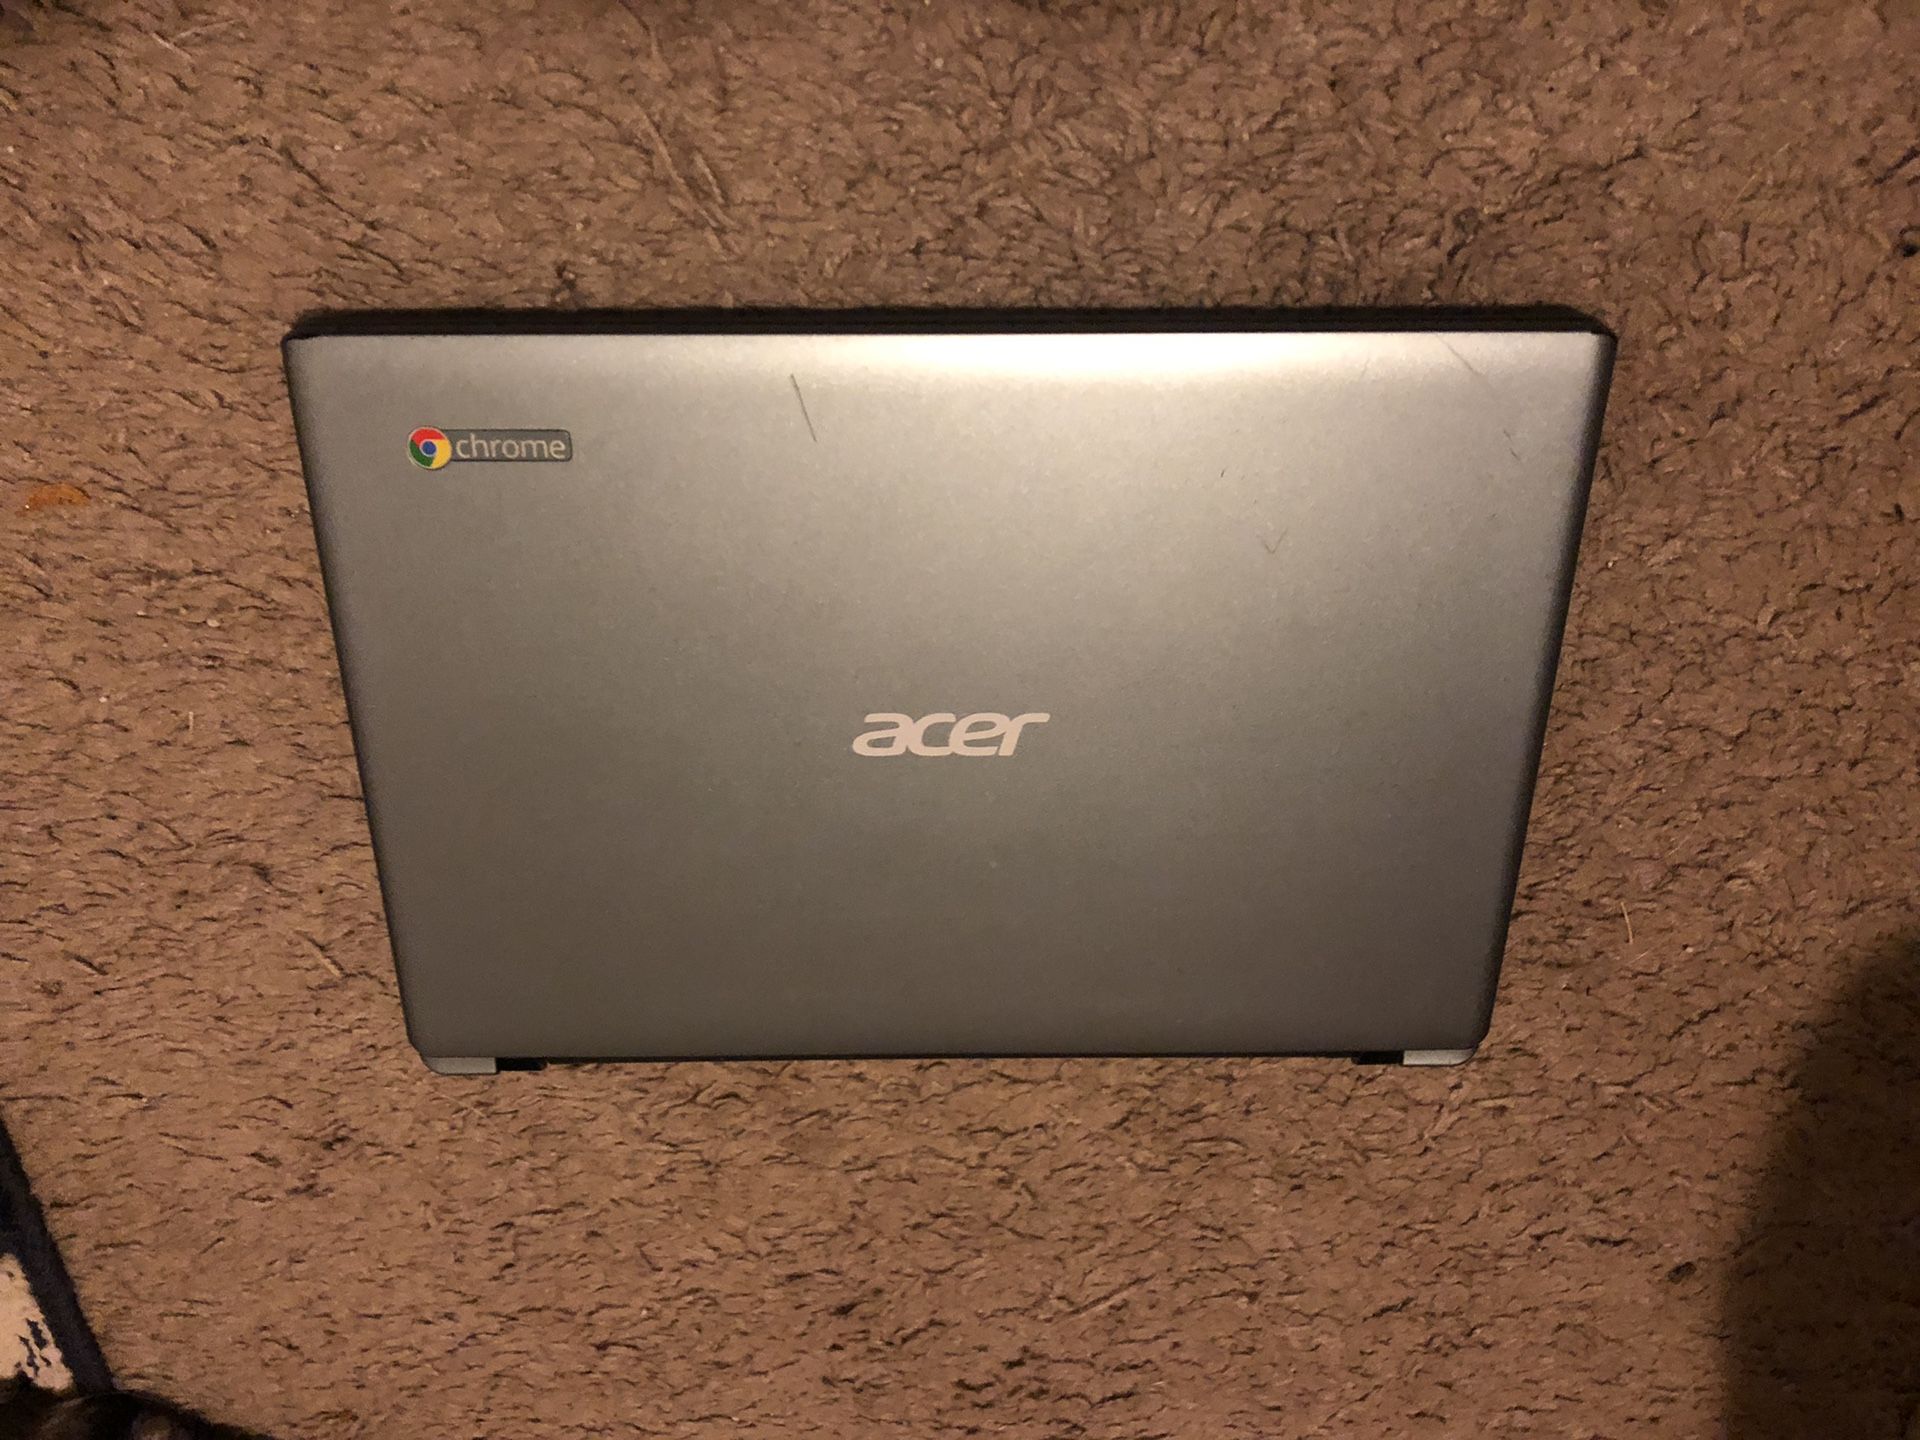 Acer Google Chrome Laptop